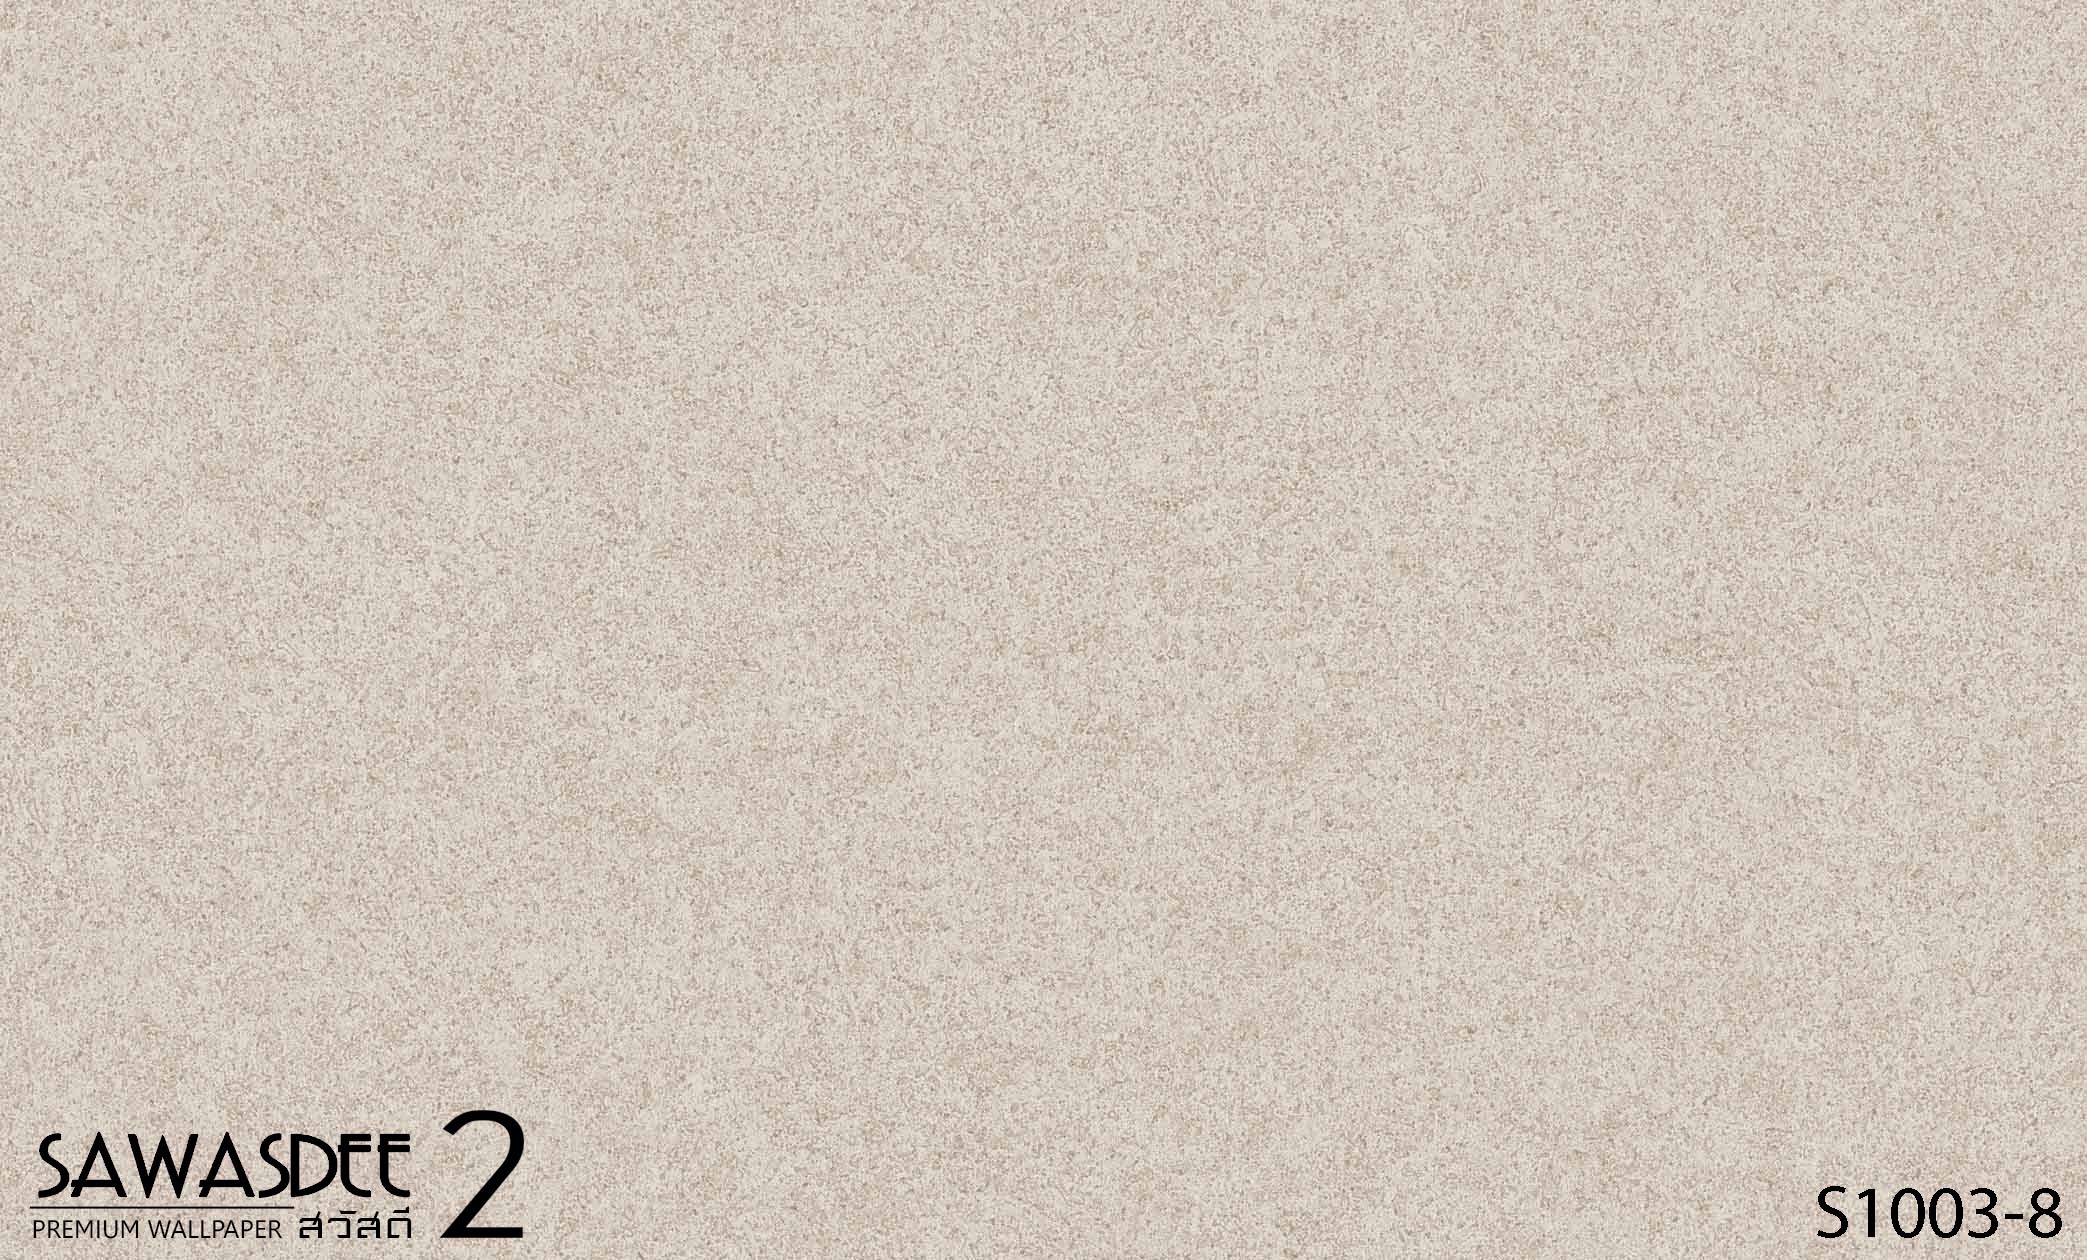 Wallpaper (SAWASDEE 2) S1003-8